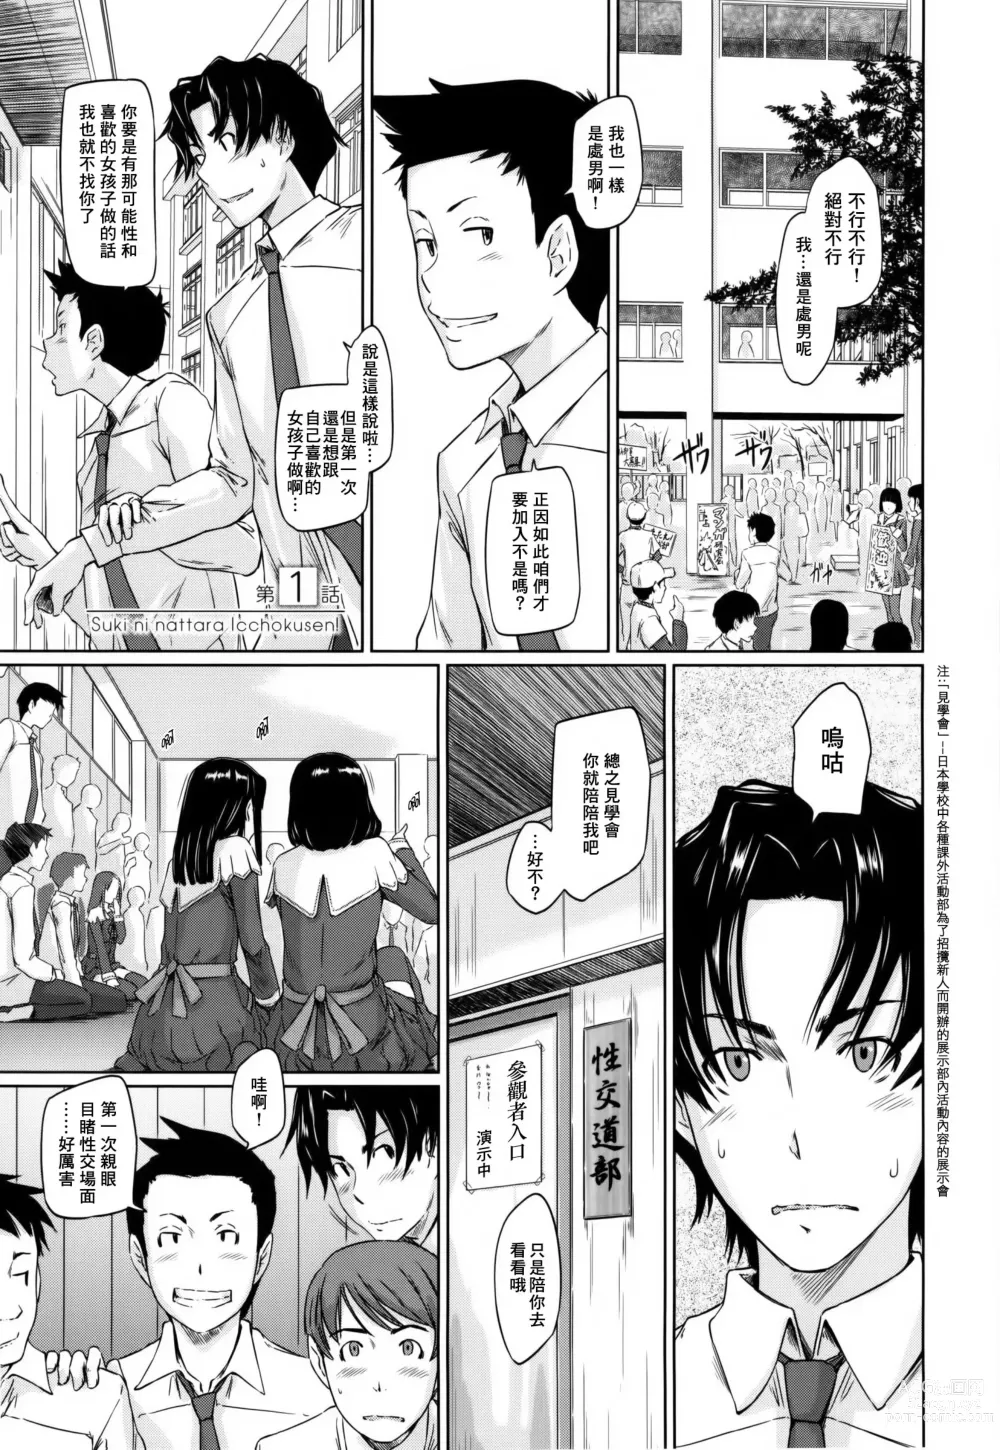 Page 9 of manga Suki ni Nattara Icchokusen!